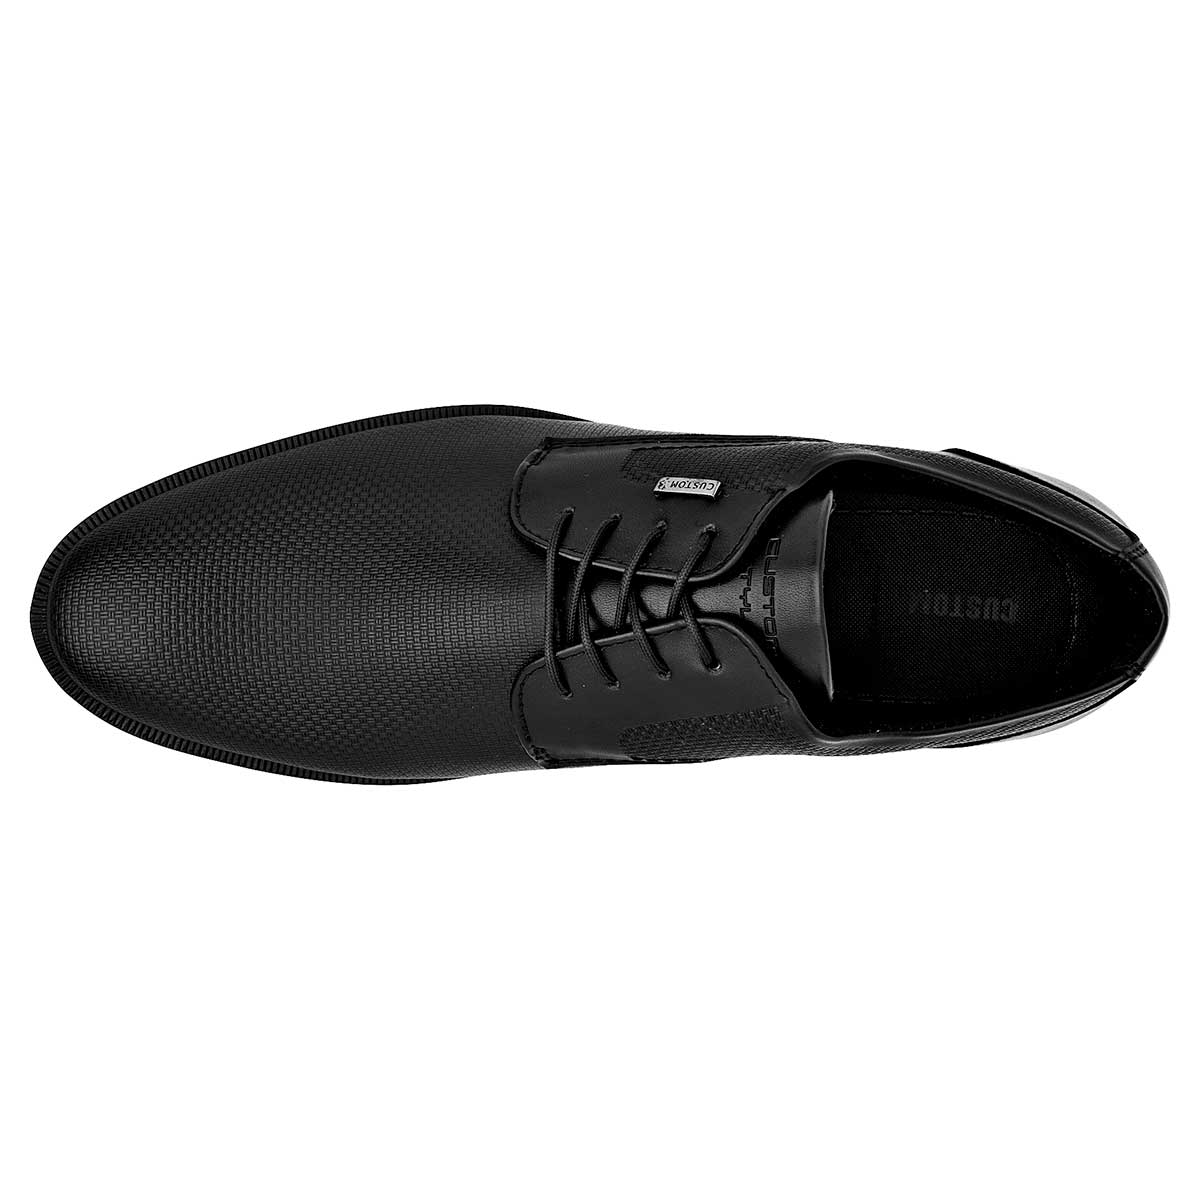 Pakar ZapaterÃƒÂ­as Tu tienda online - Negro Total Zapato de vestir color negro hombre, cÃƒÂ³digo 109171